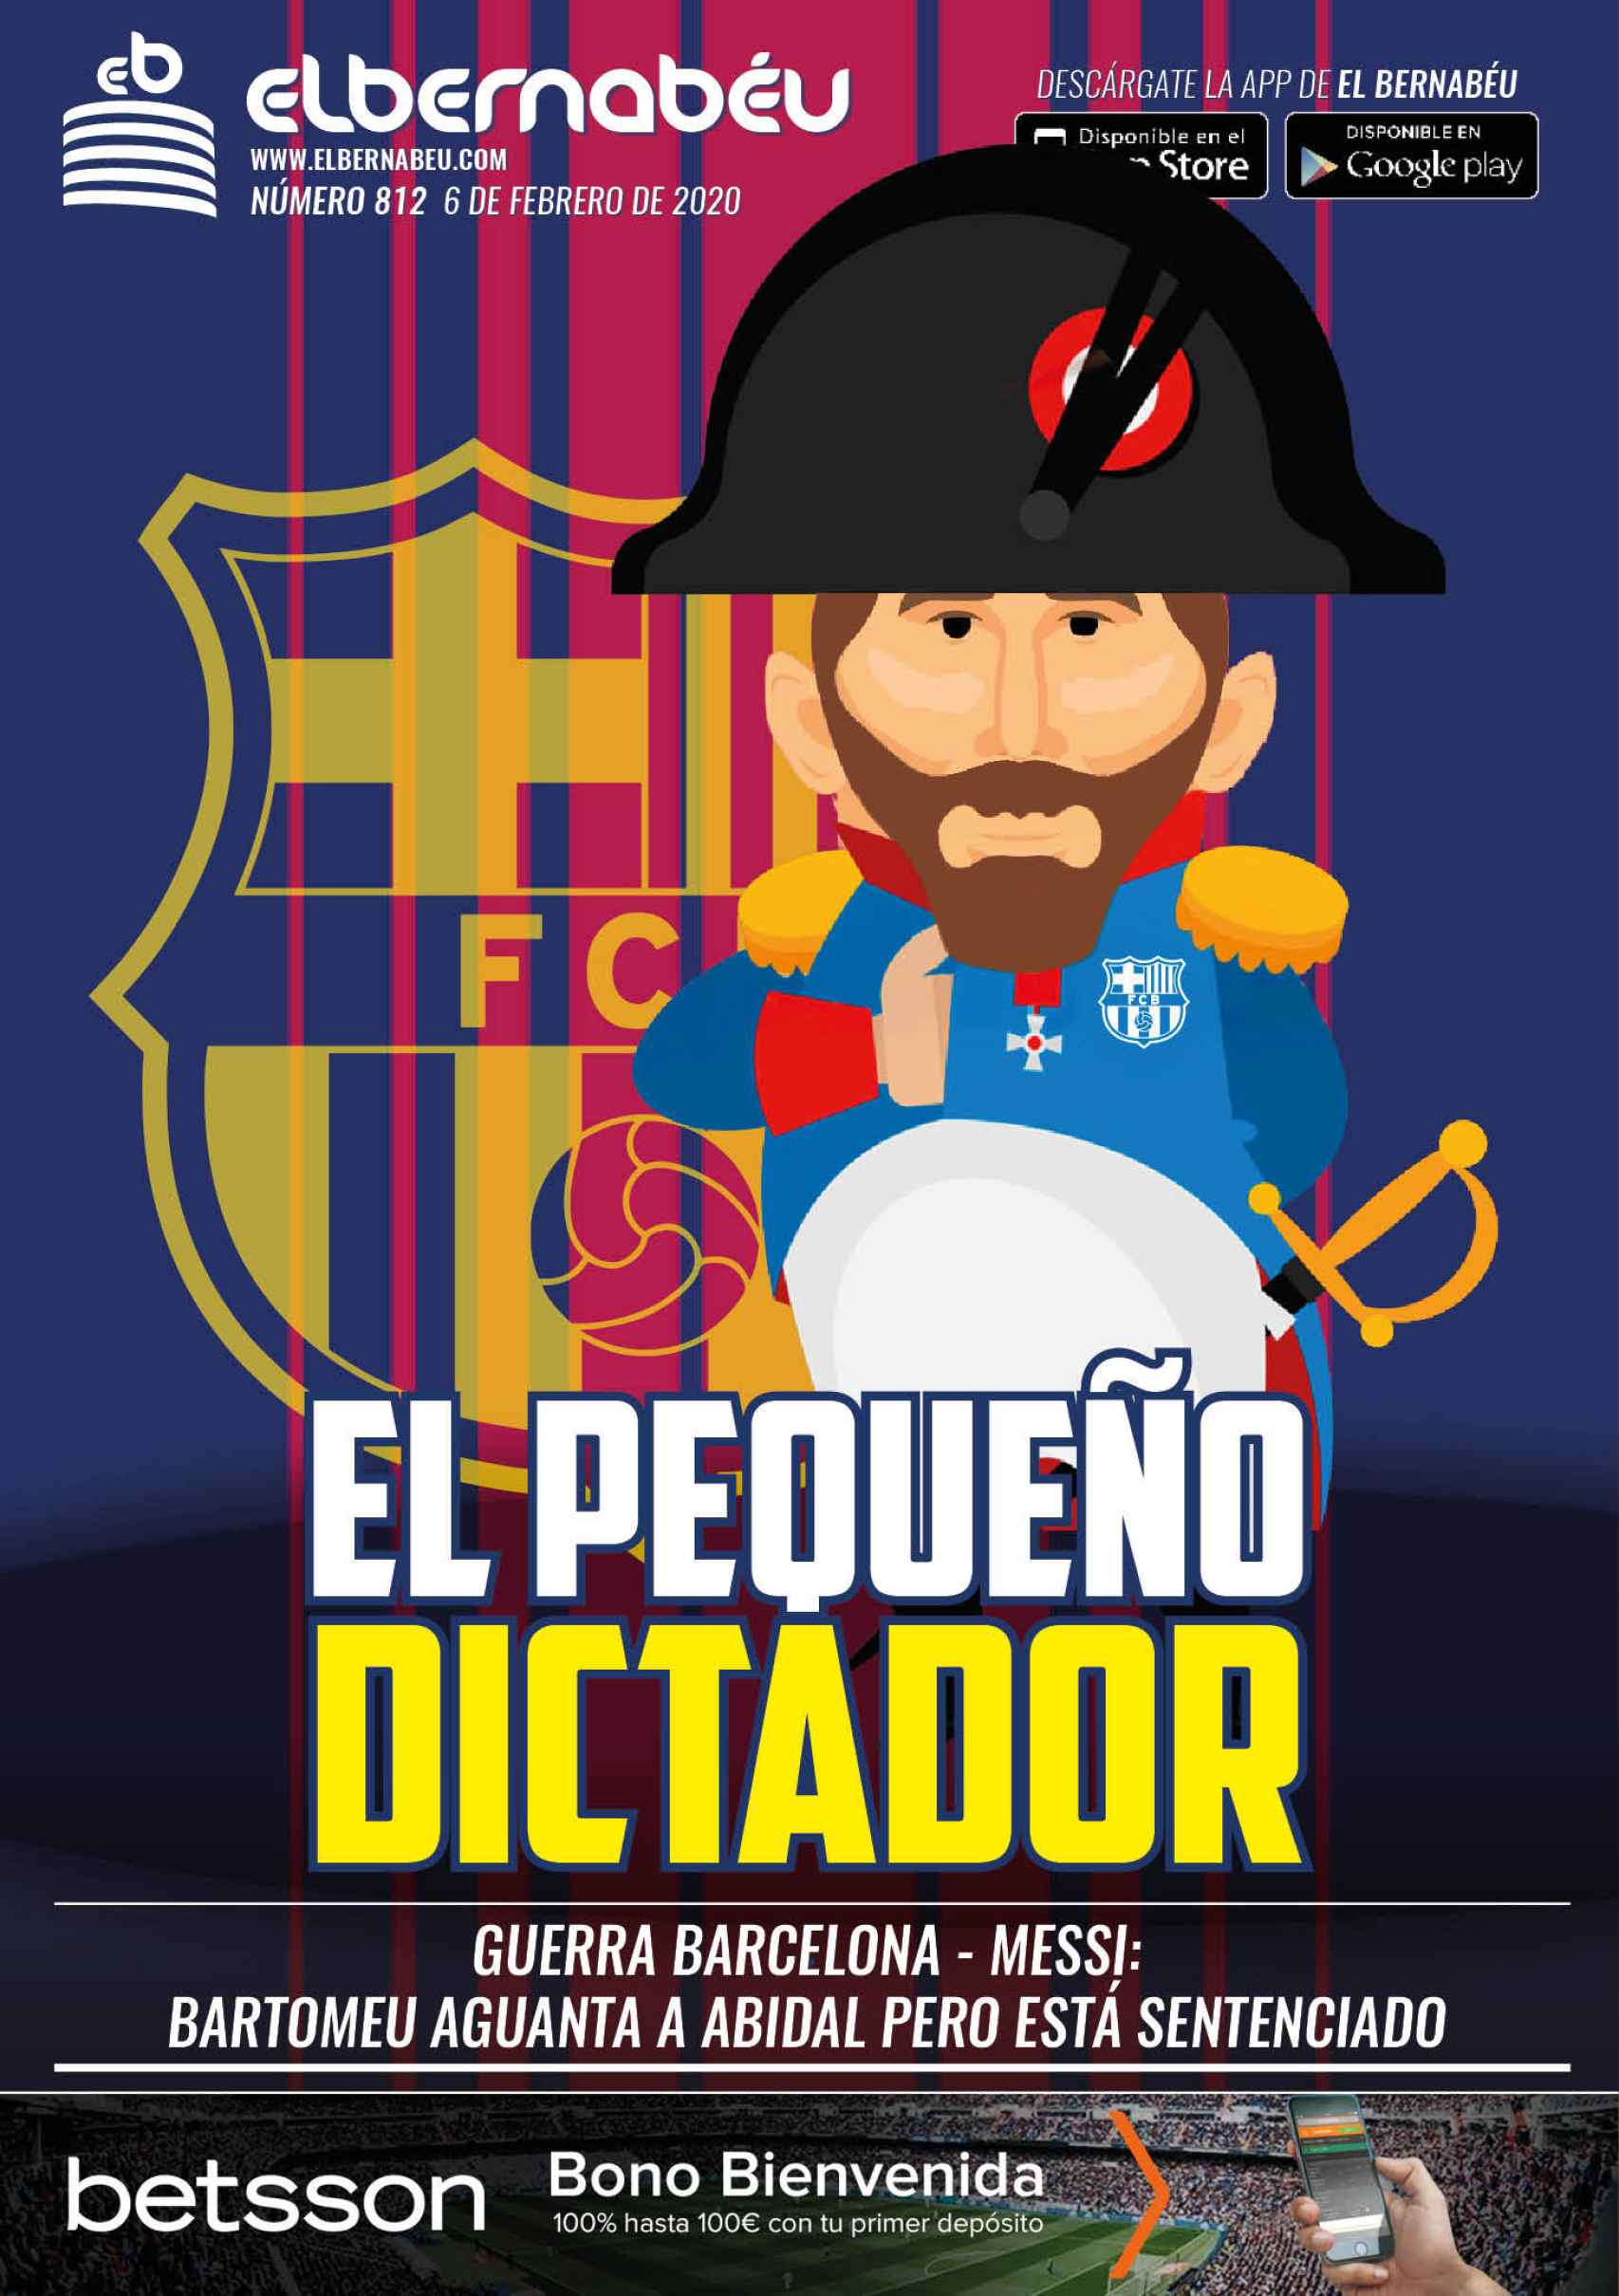 La portada de El Bernabéu (06/02/2020)